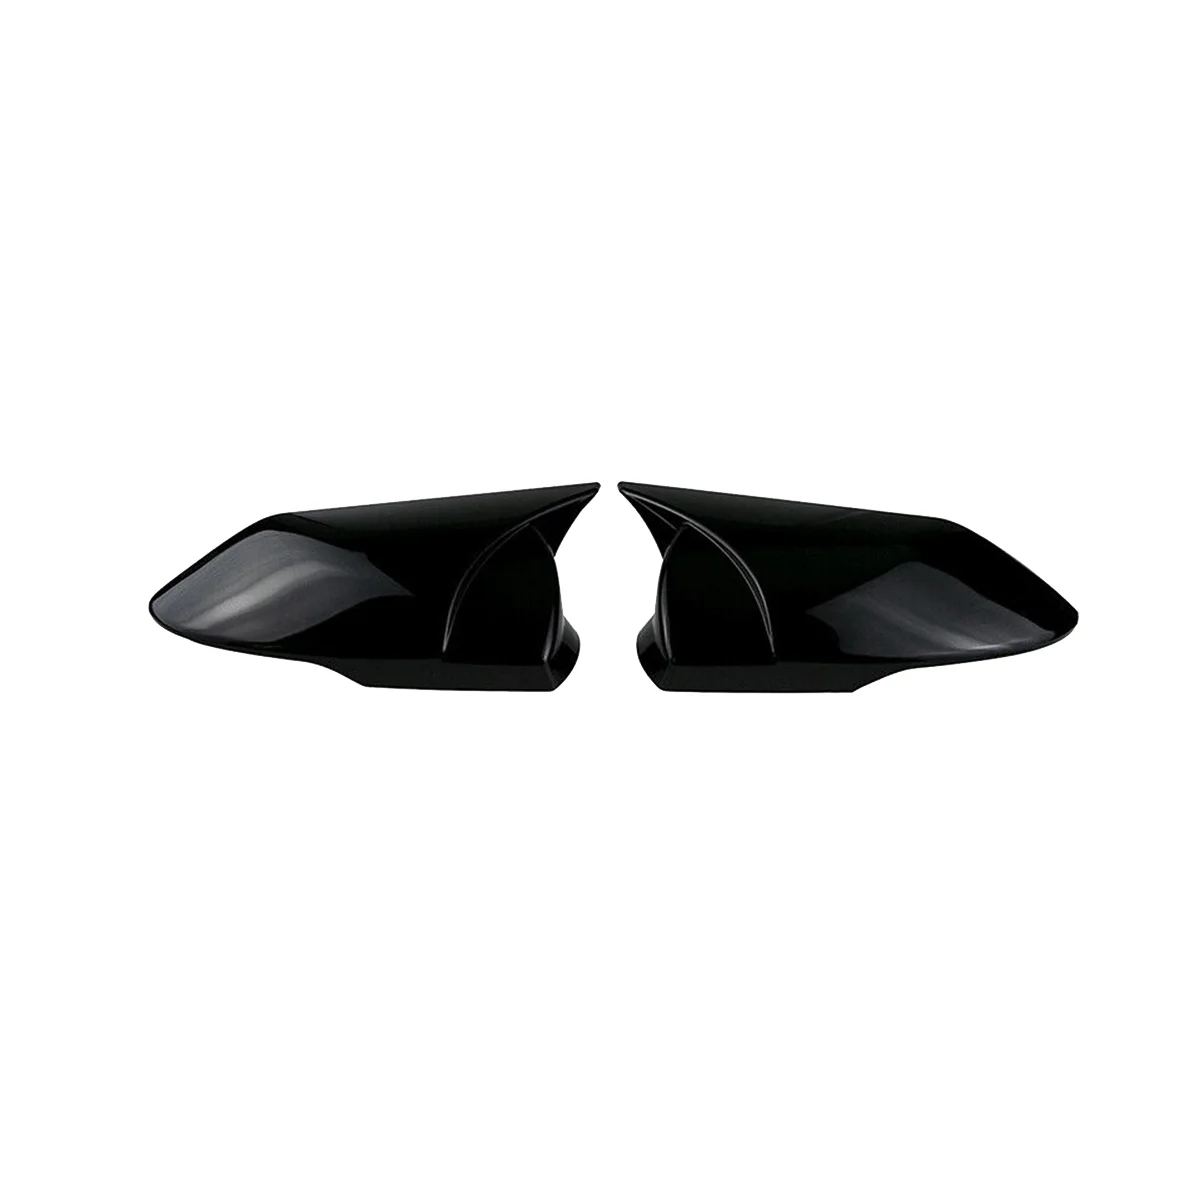 

Глянцевая черная задняя крышка для зеркала заднего вида Hyundai Elantra 2021 2022